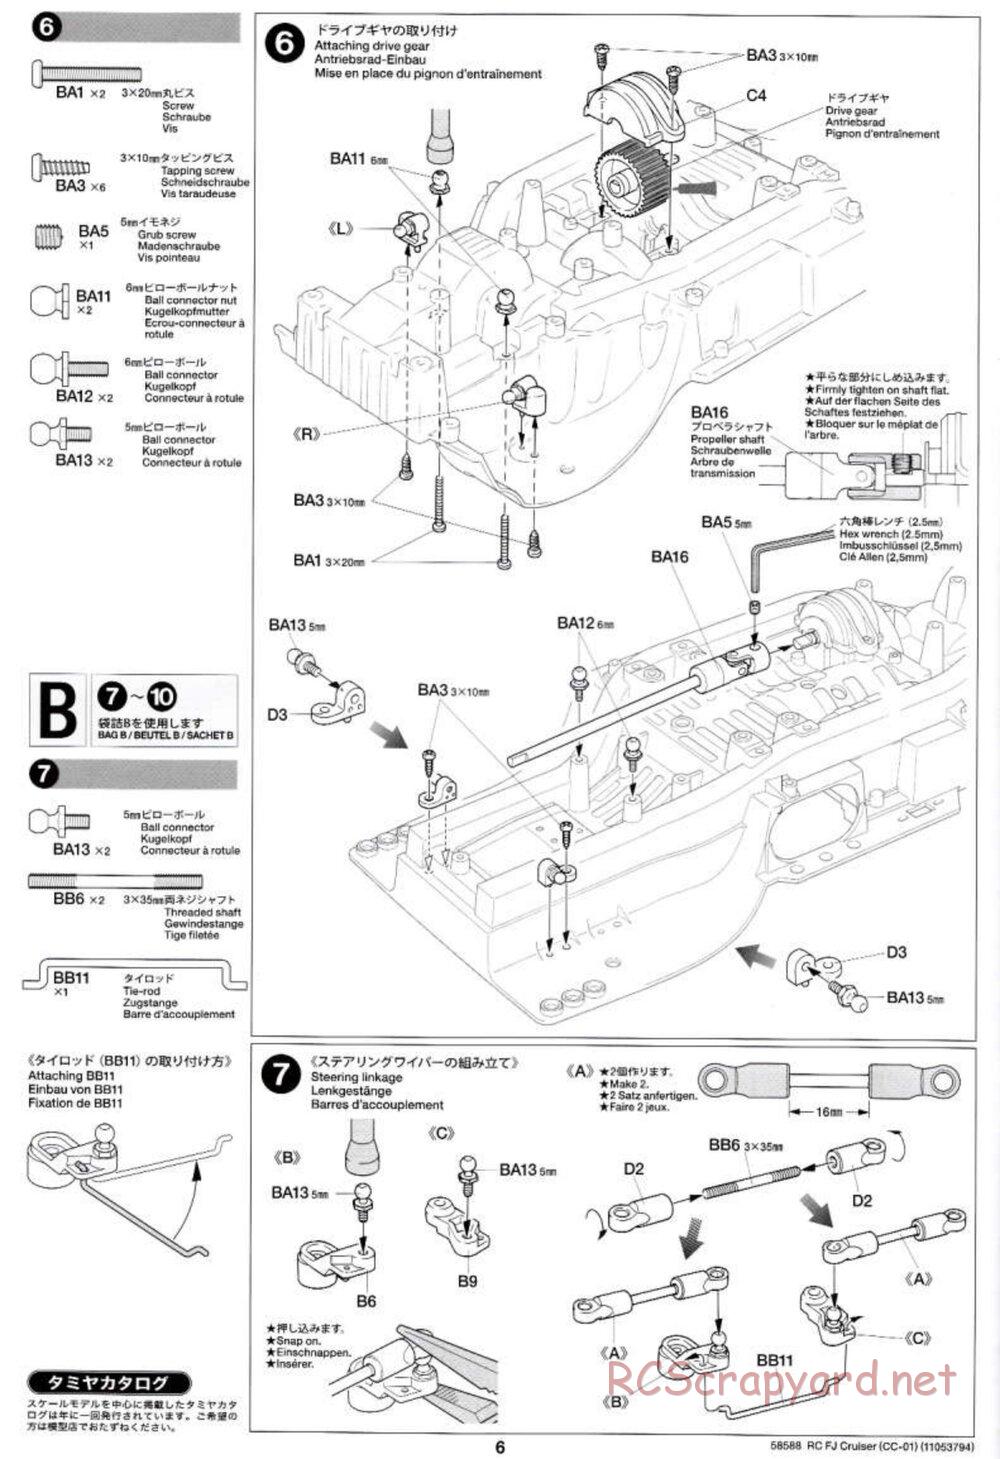 Tamiya - Toyota FJ Cruiser - CC-01 Chassis - Manual - Page 6